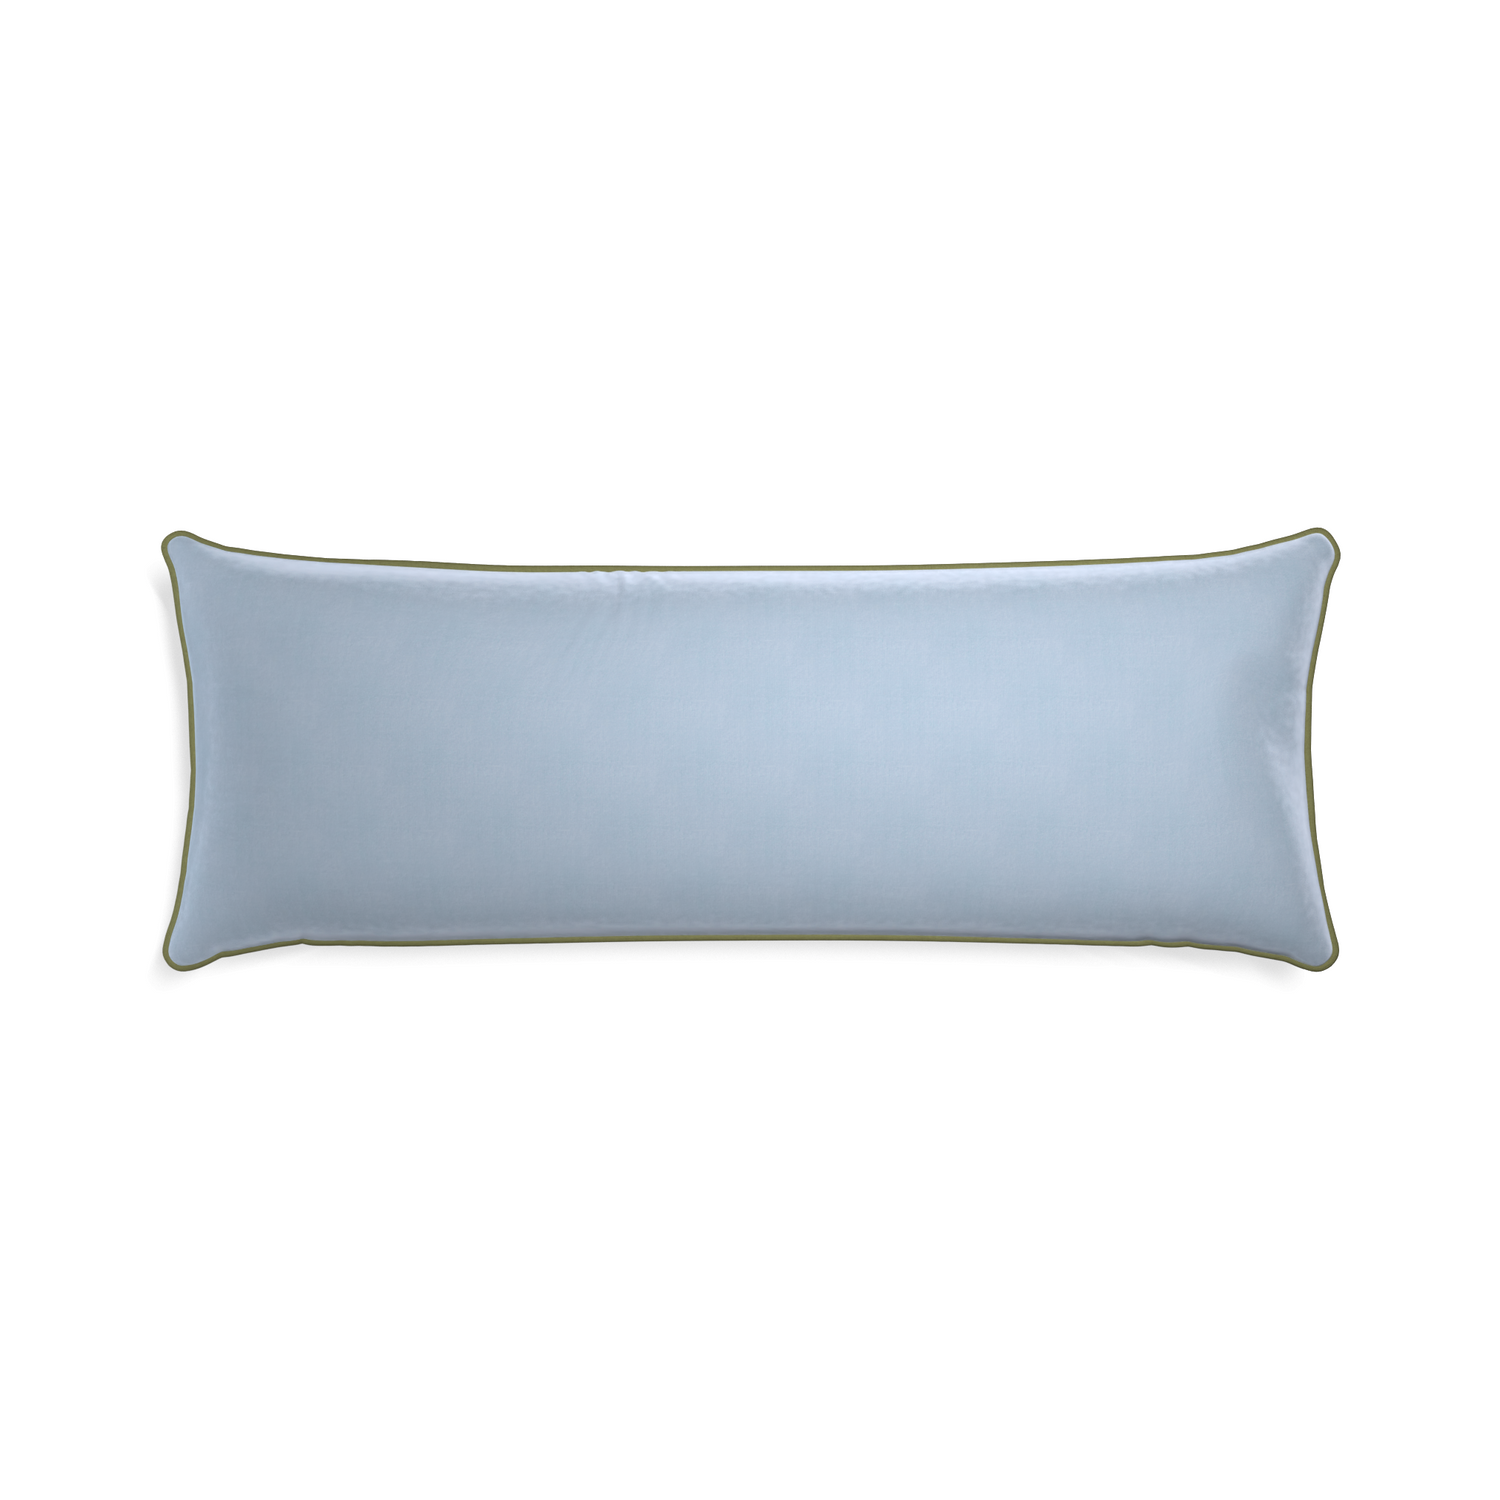 Xl-lumbar sky velvet custom pillow with moss piping on white background